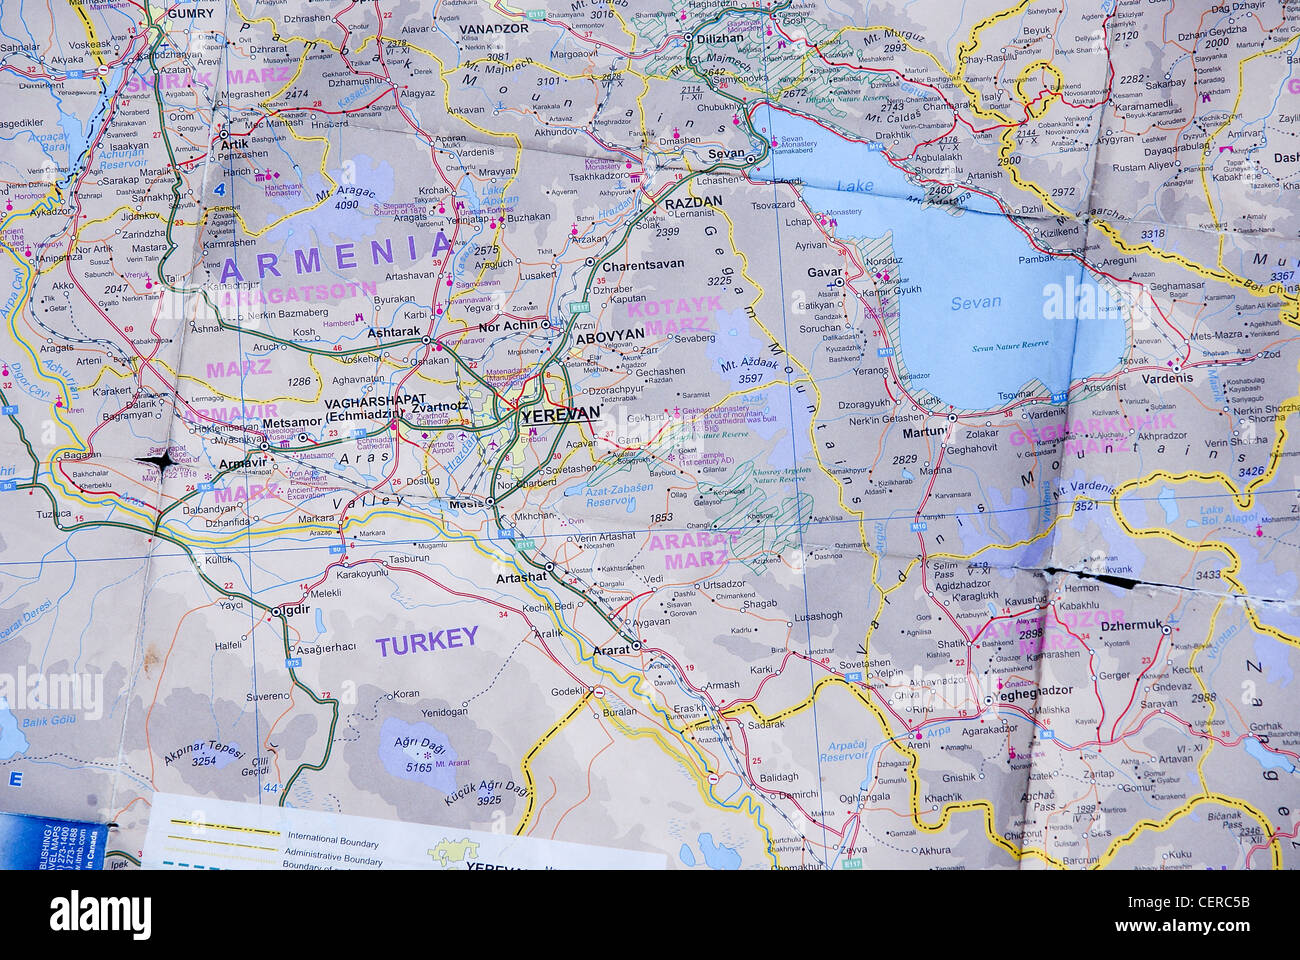 Road map of Armenia, Turkey and the Caucasus Stock Photo